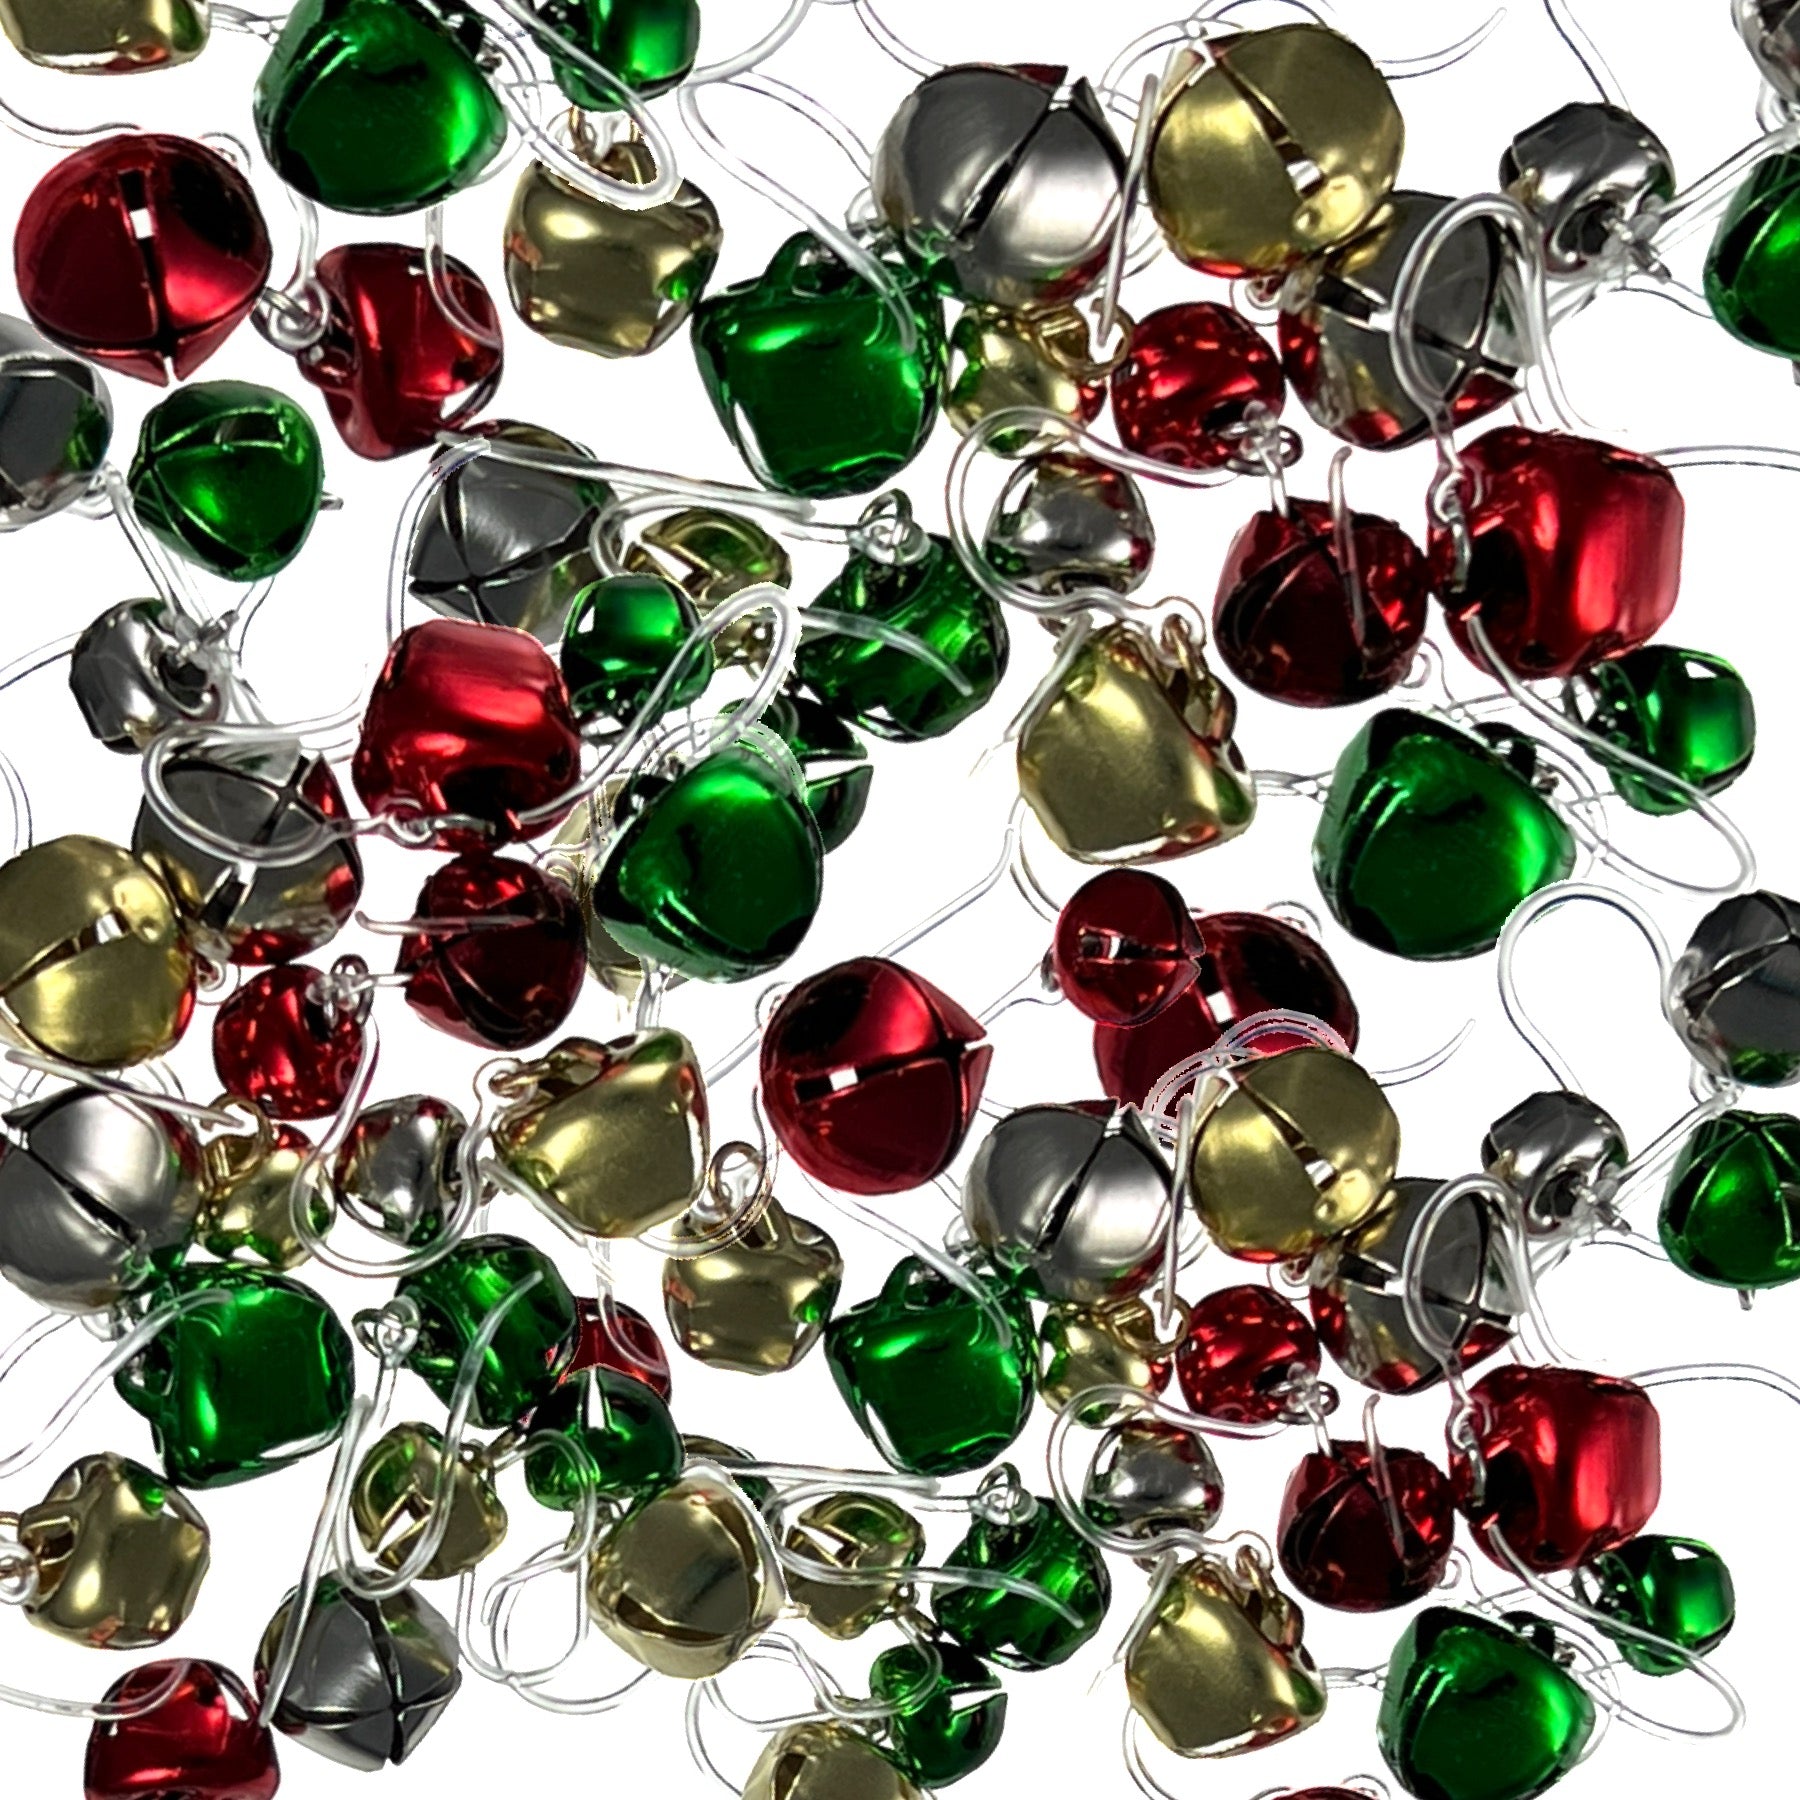 Festive Jingle Bell Earrings - all colors & sizes